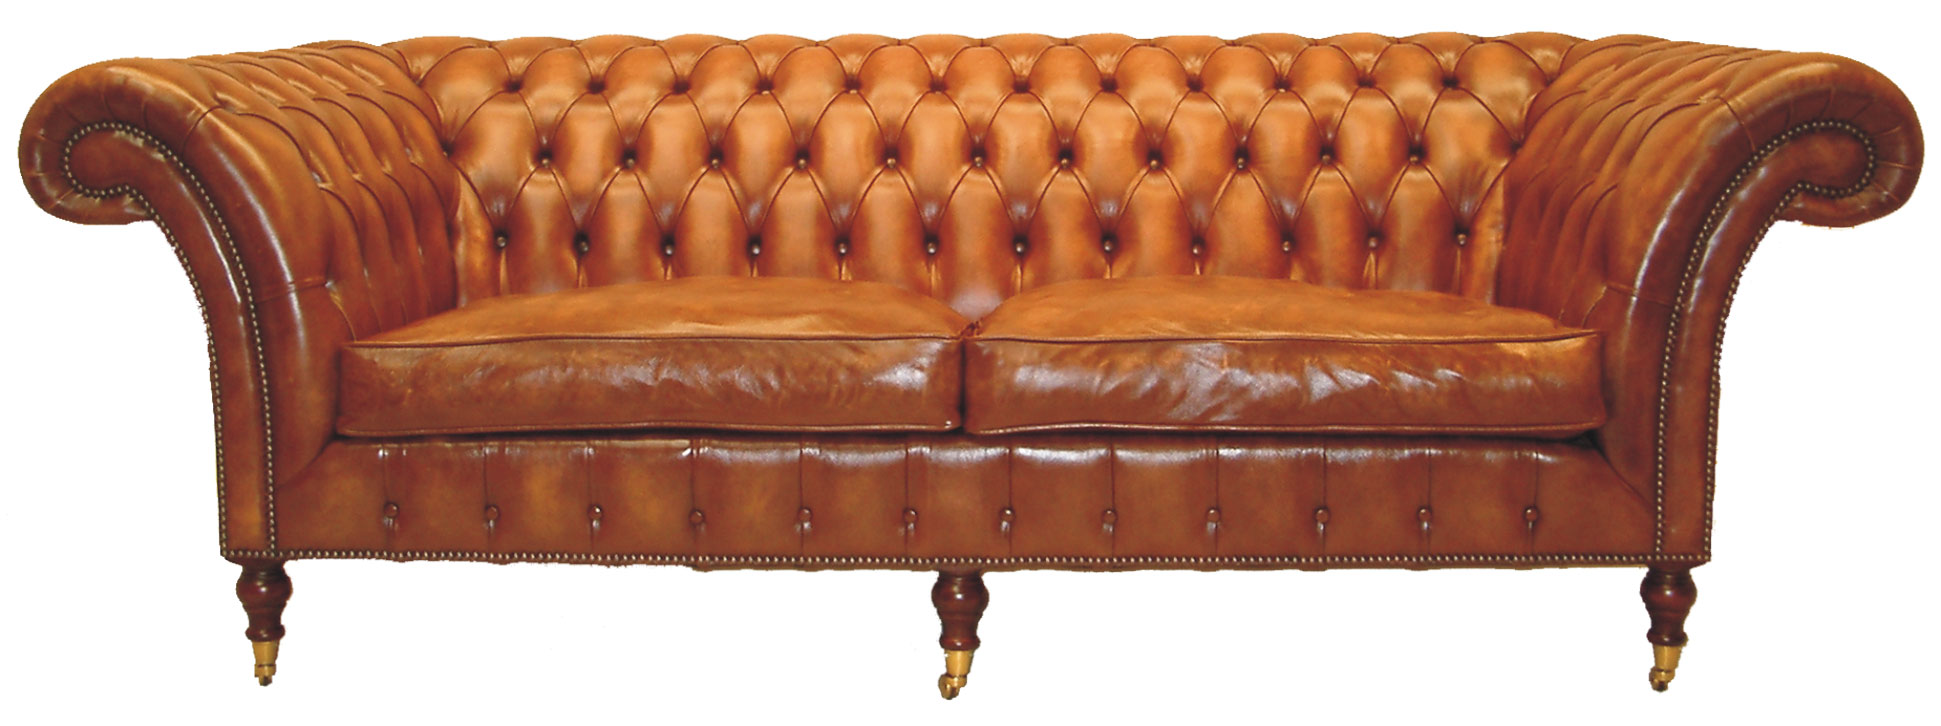 "Victorian" Chesterfield Sofa